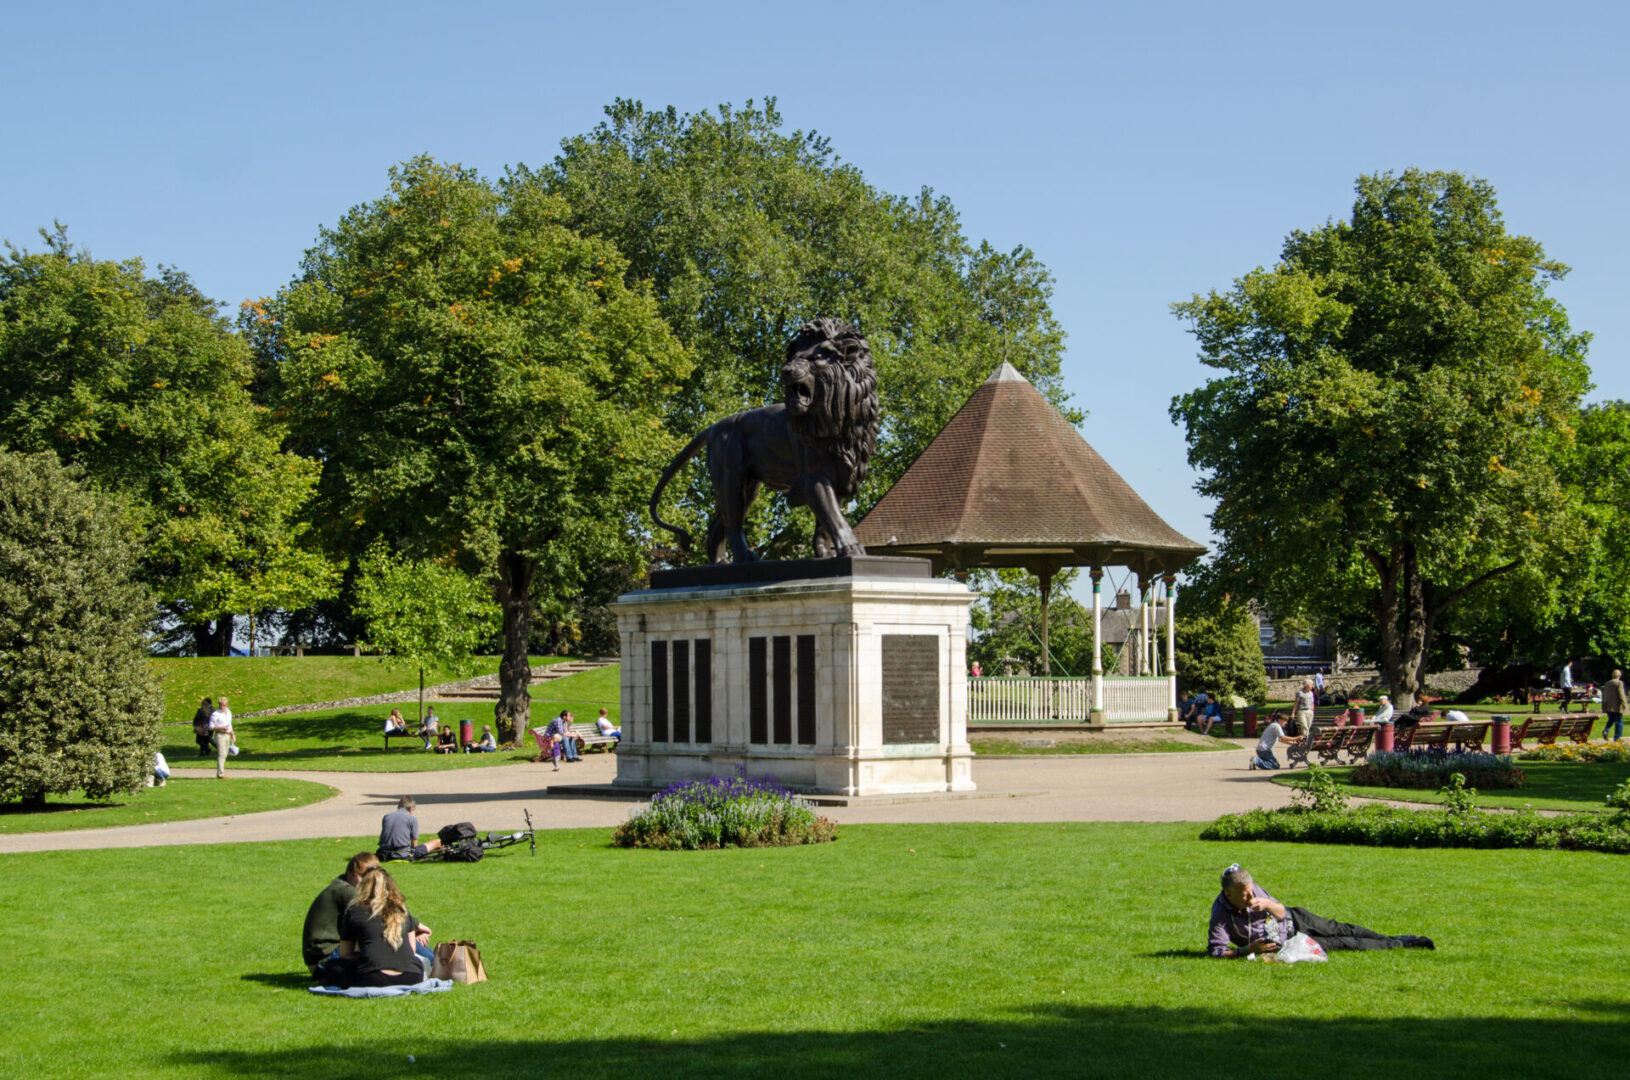 People enjoying the sunshine in Forbury Gardens in Reading, Berkshire